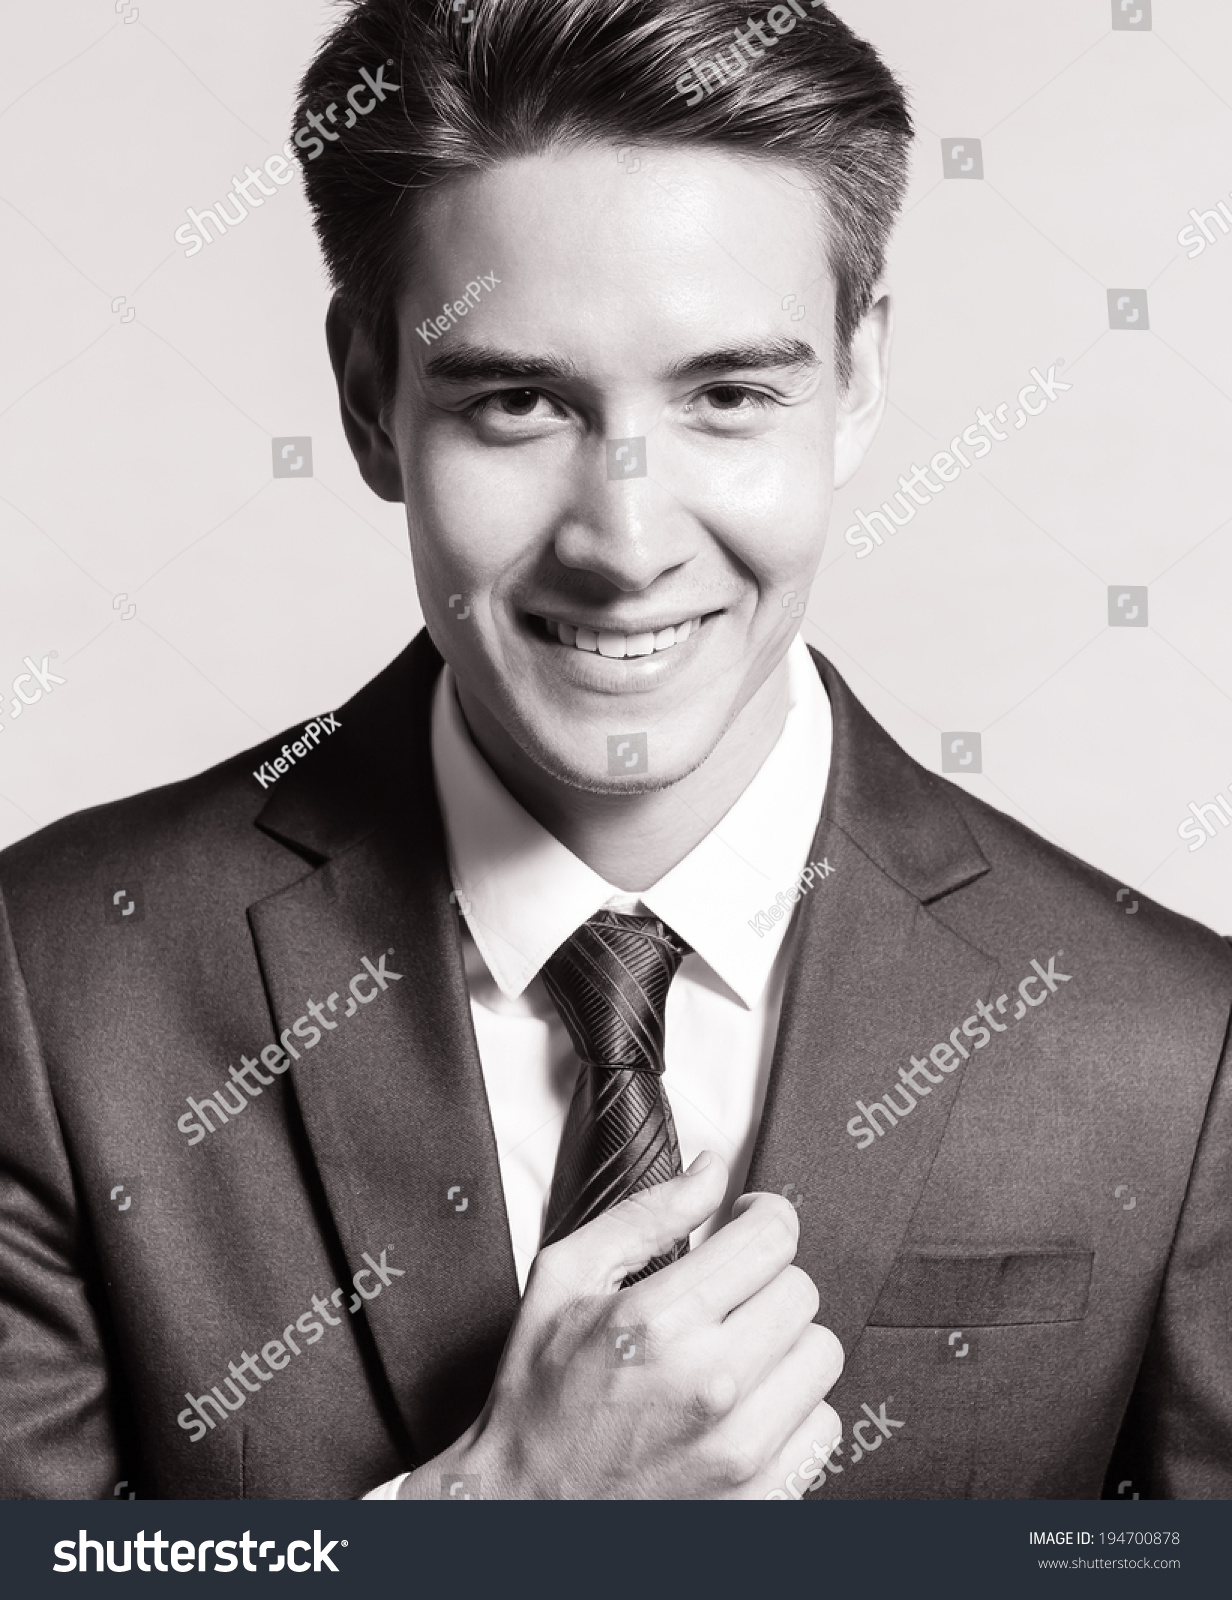 Handsome business man smiling. #194700878